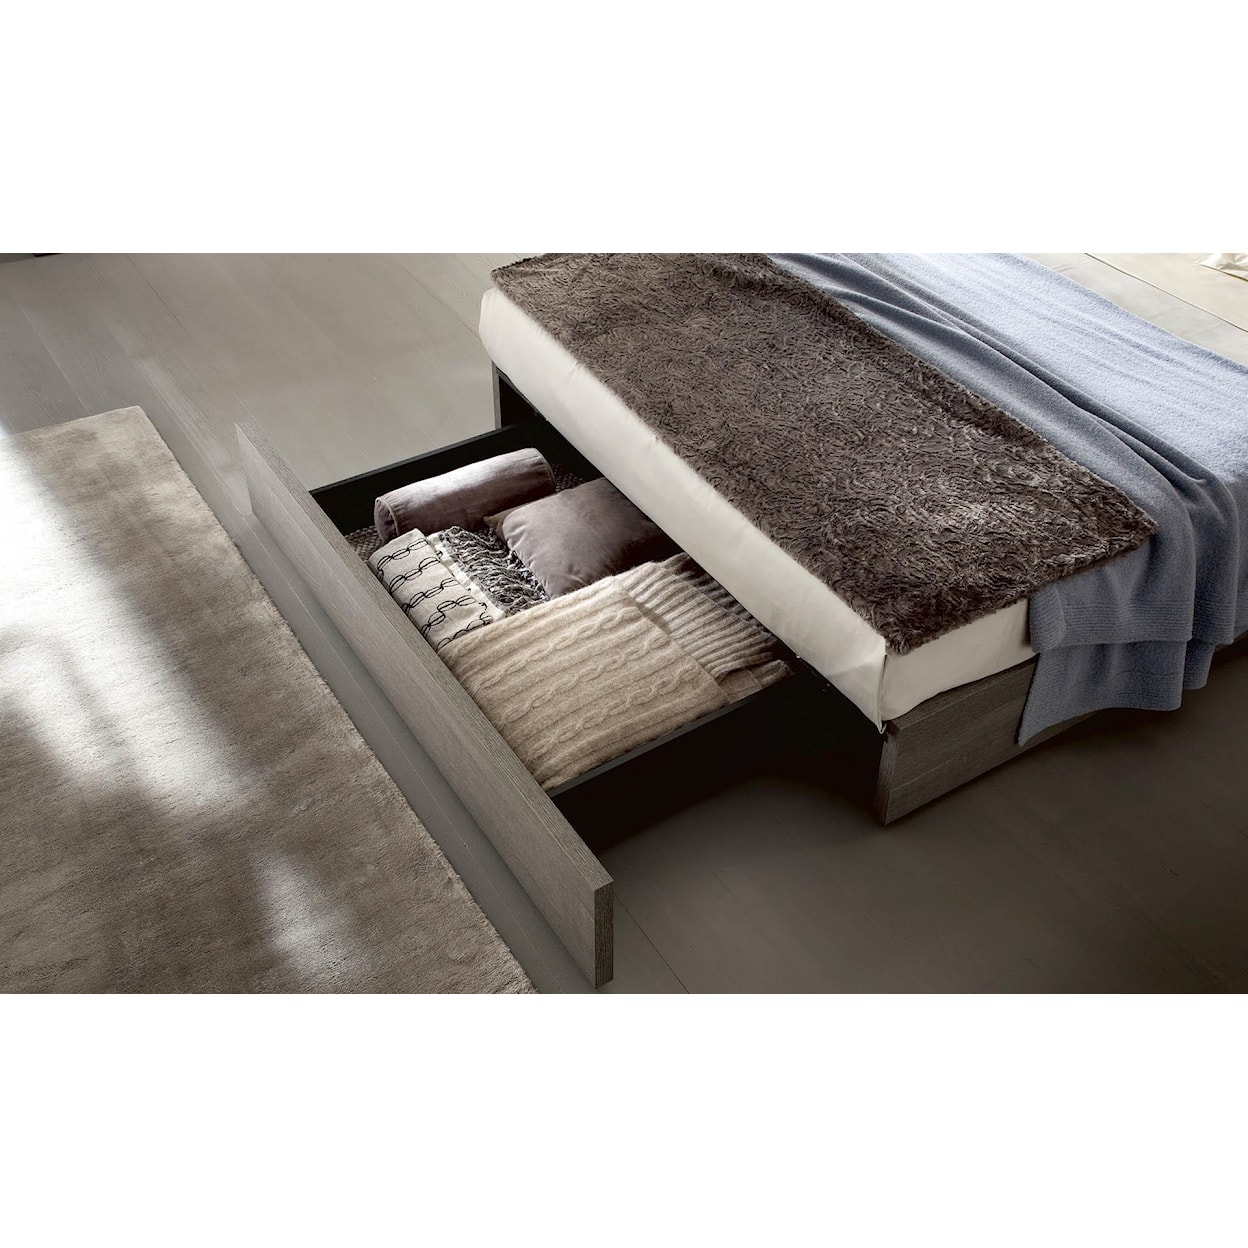 Alf Italia Tivoli King Bed with LED Light and Storage Drawer